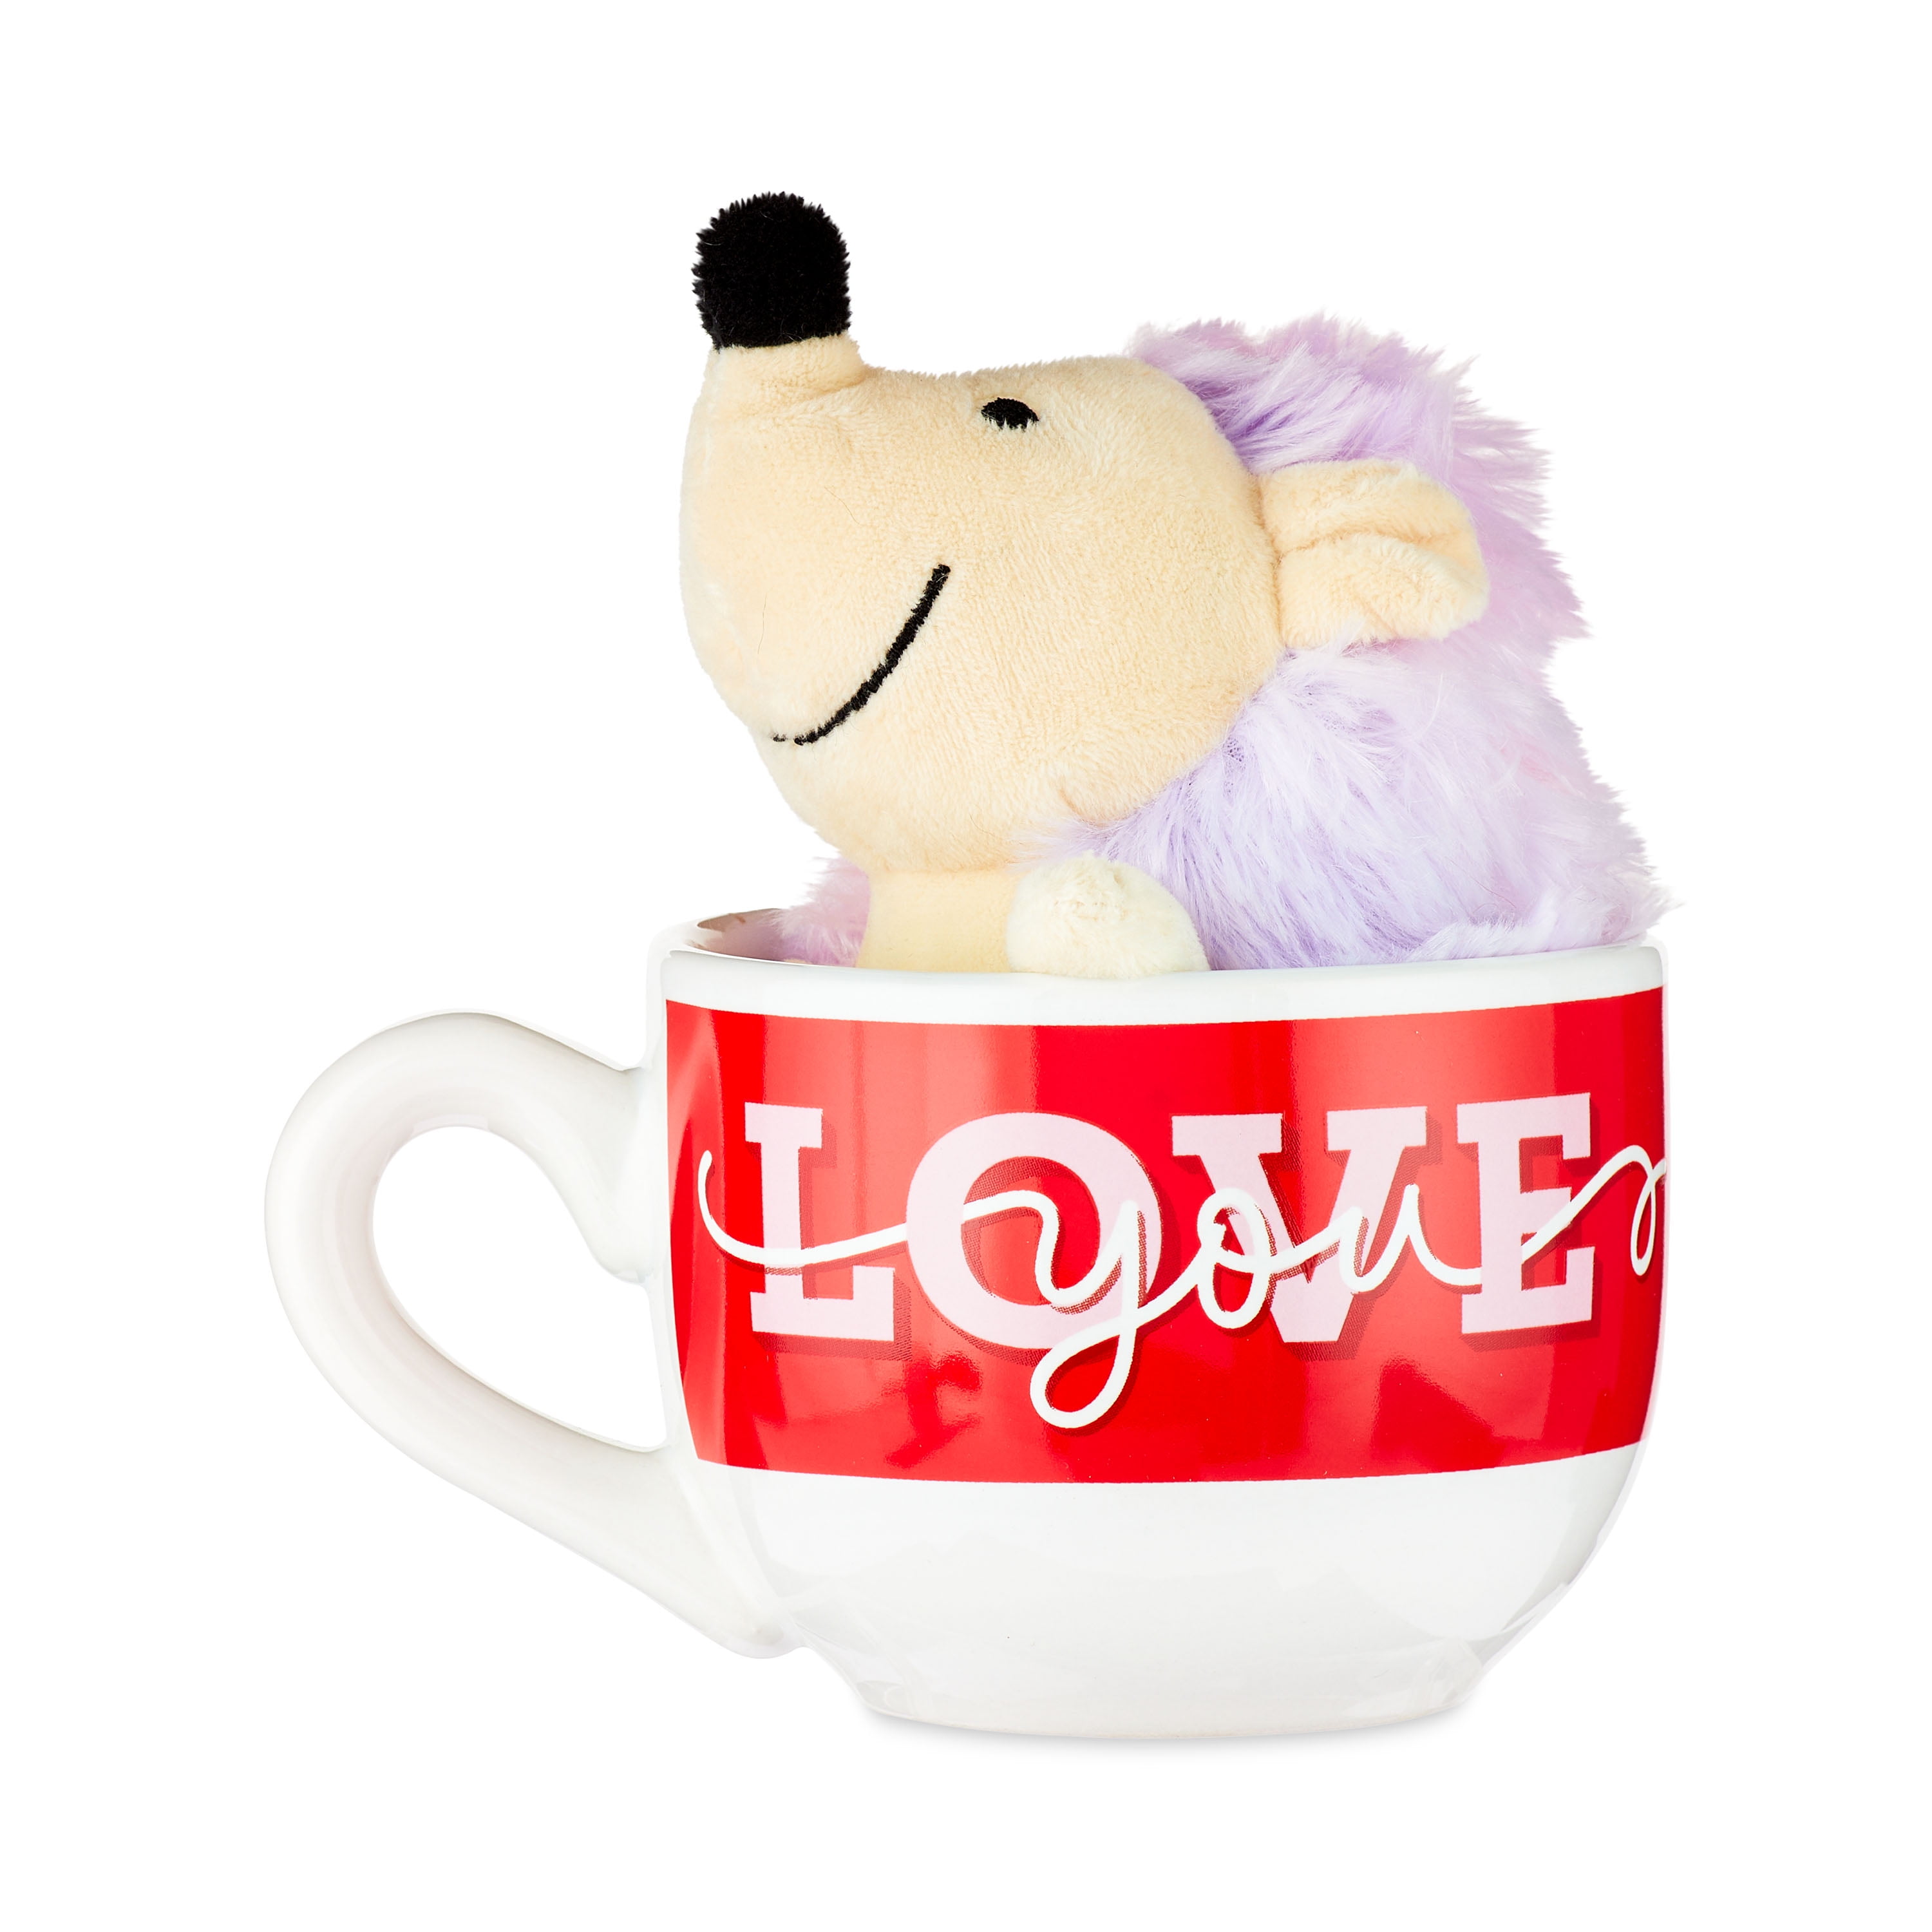 Way to Celebrate! Valentine’s Day Plush Toy in Teacher Mug Gift Set, Hedgehog